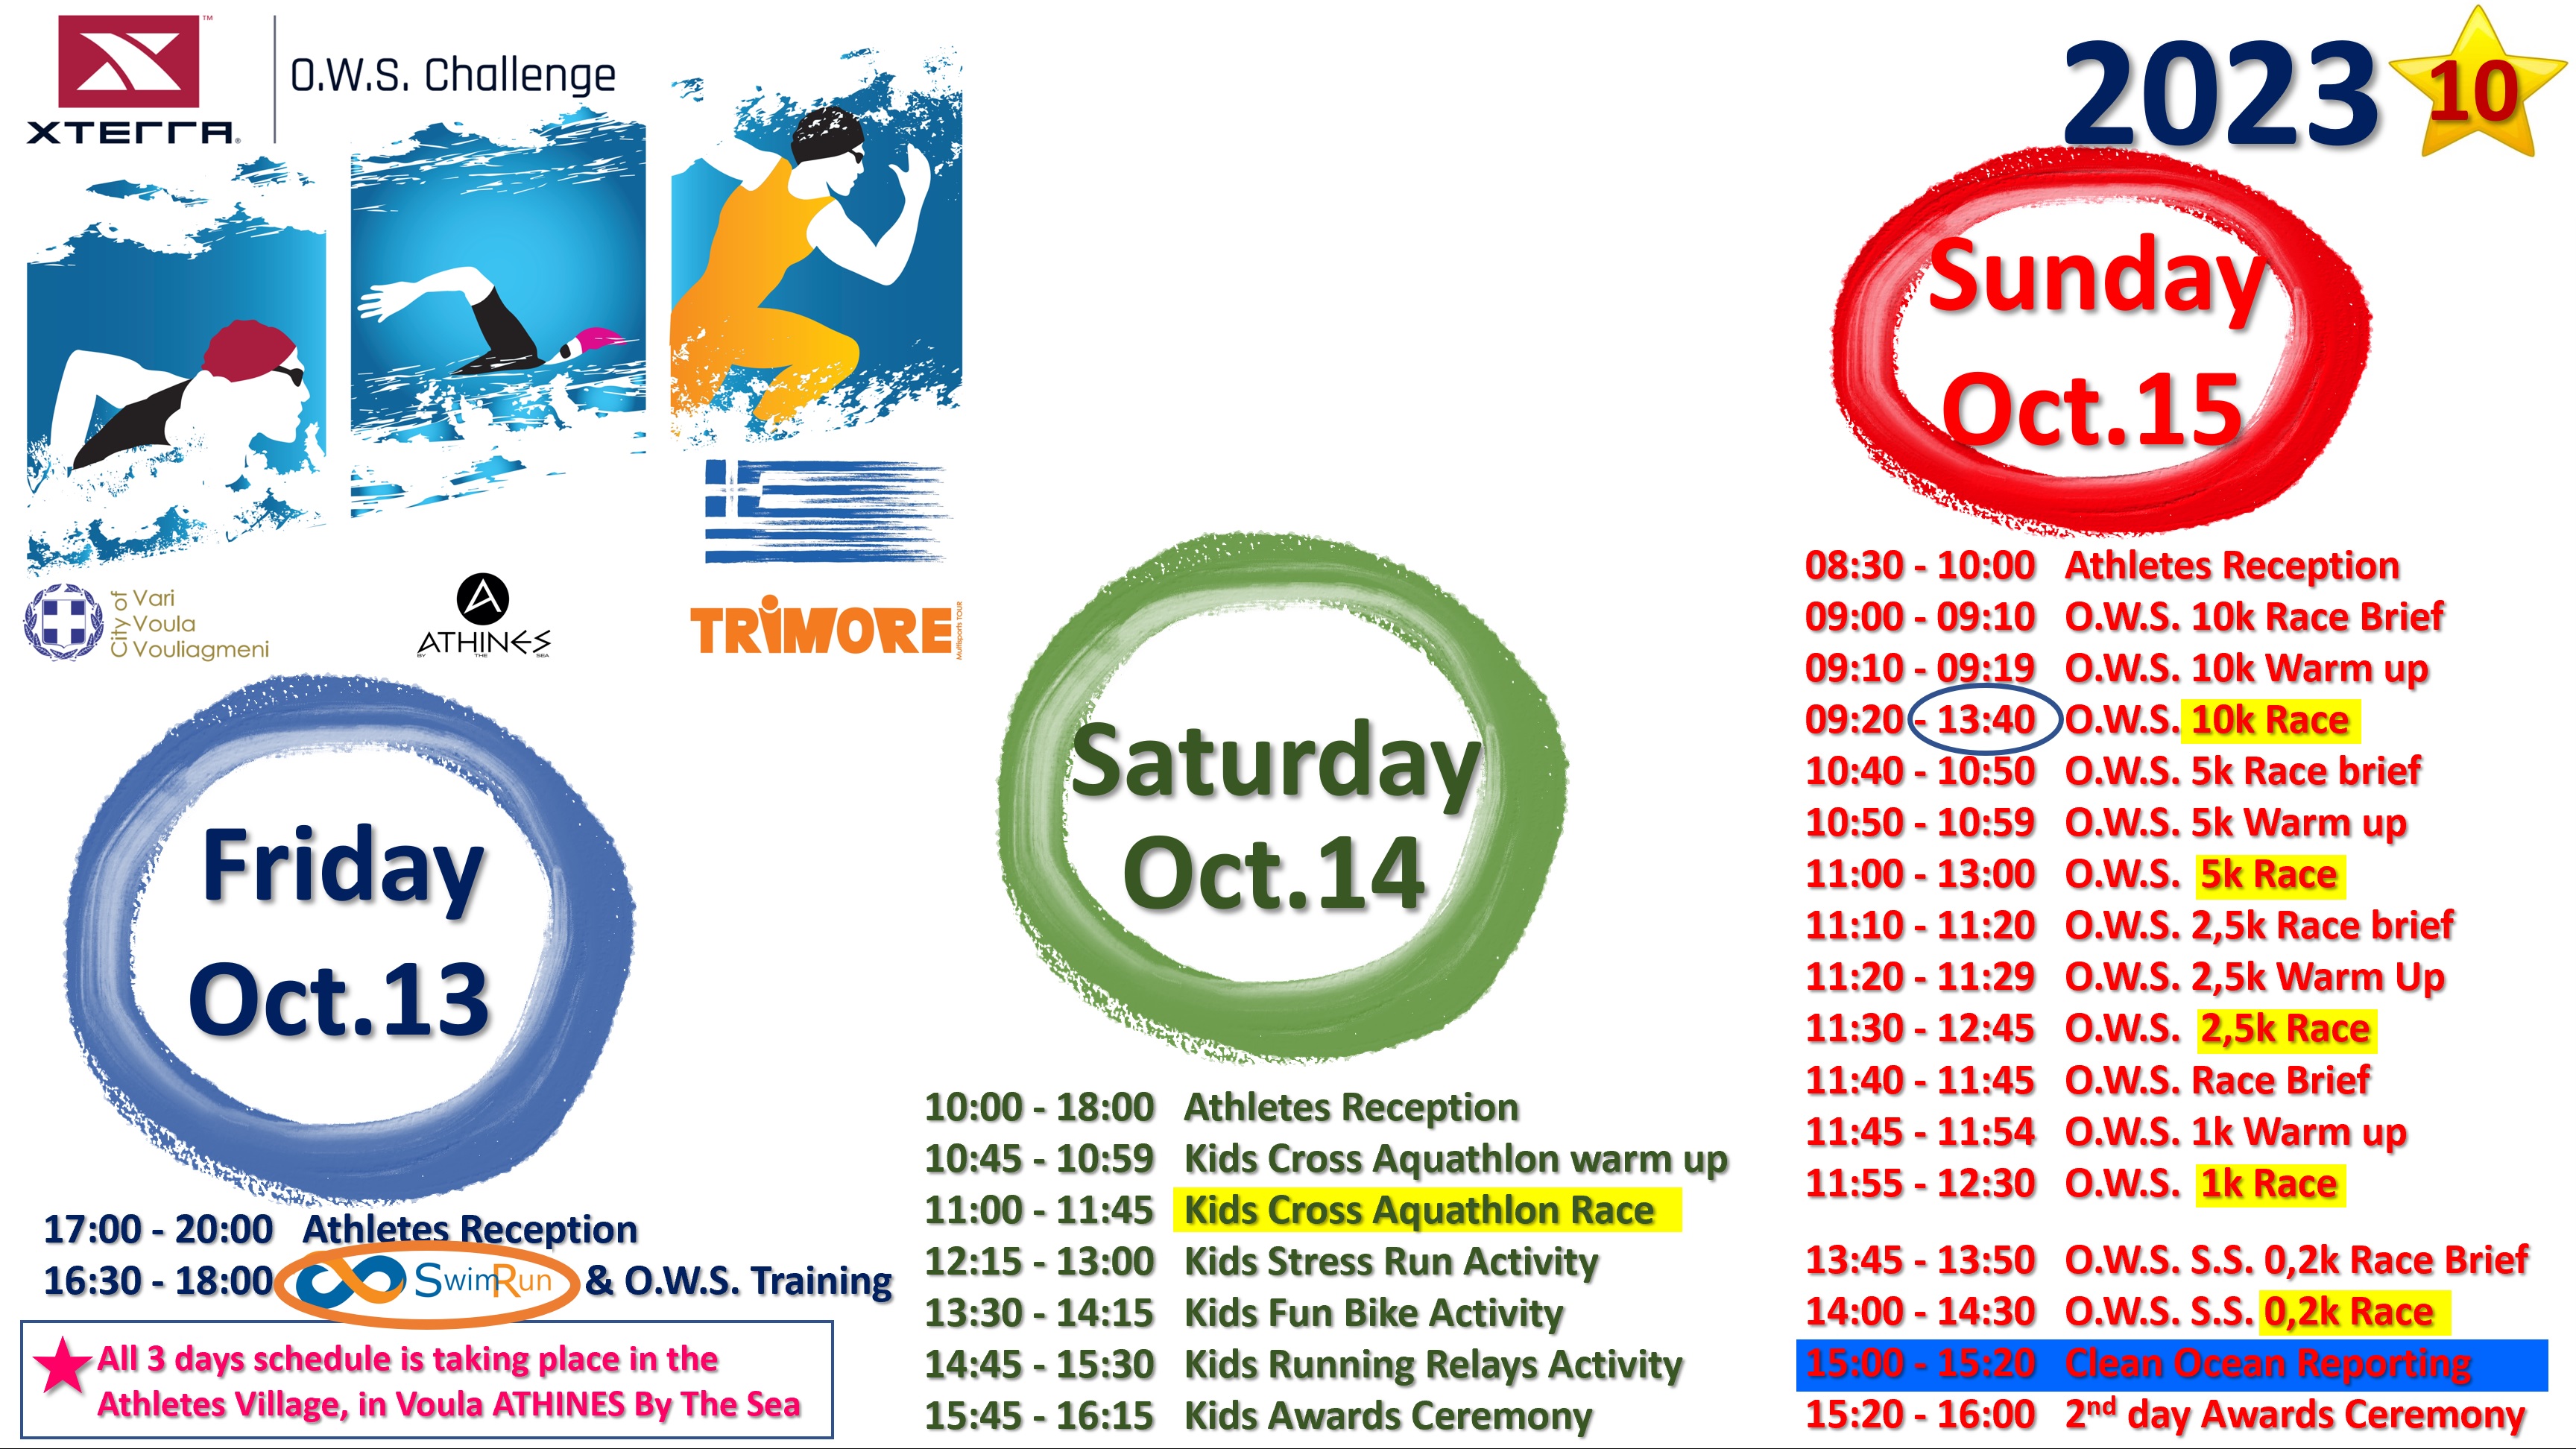 20232 XTERRA OWS Challenge Events Schedule